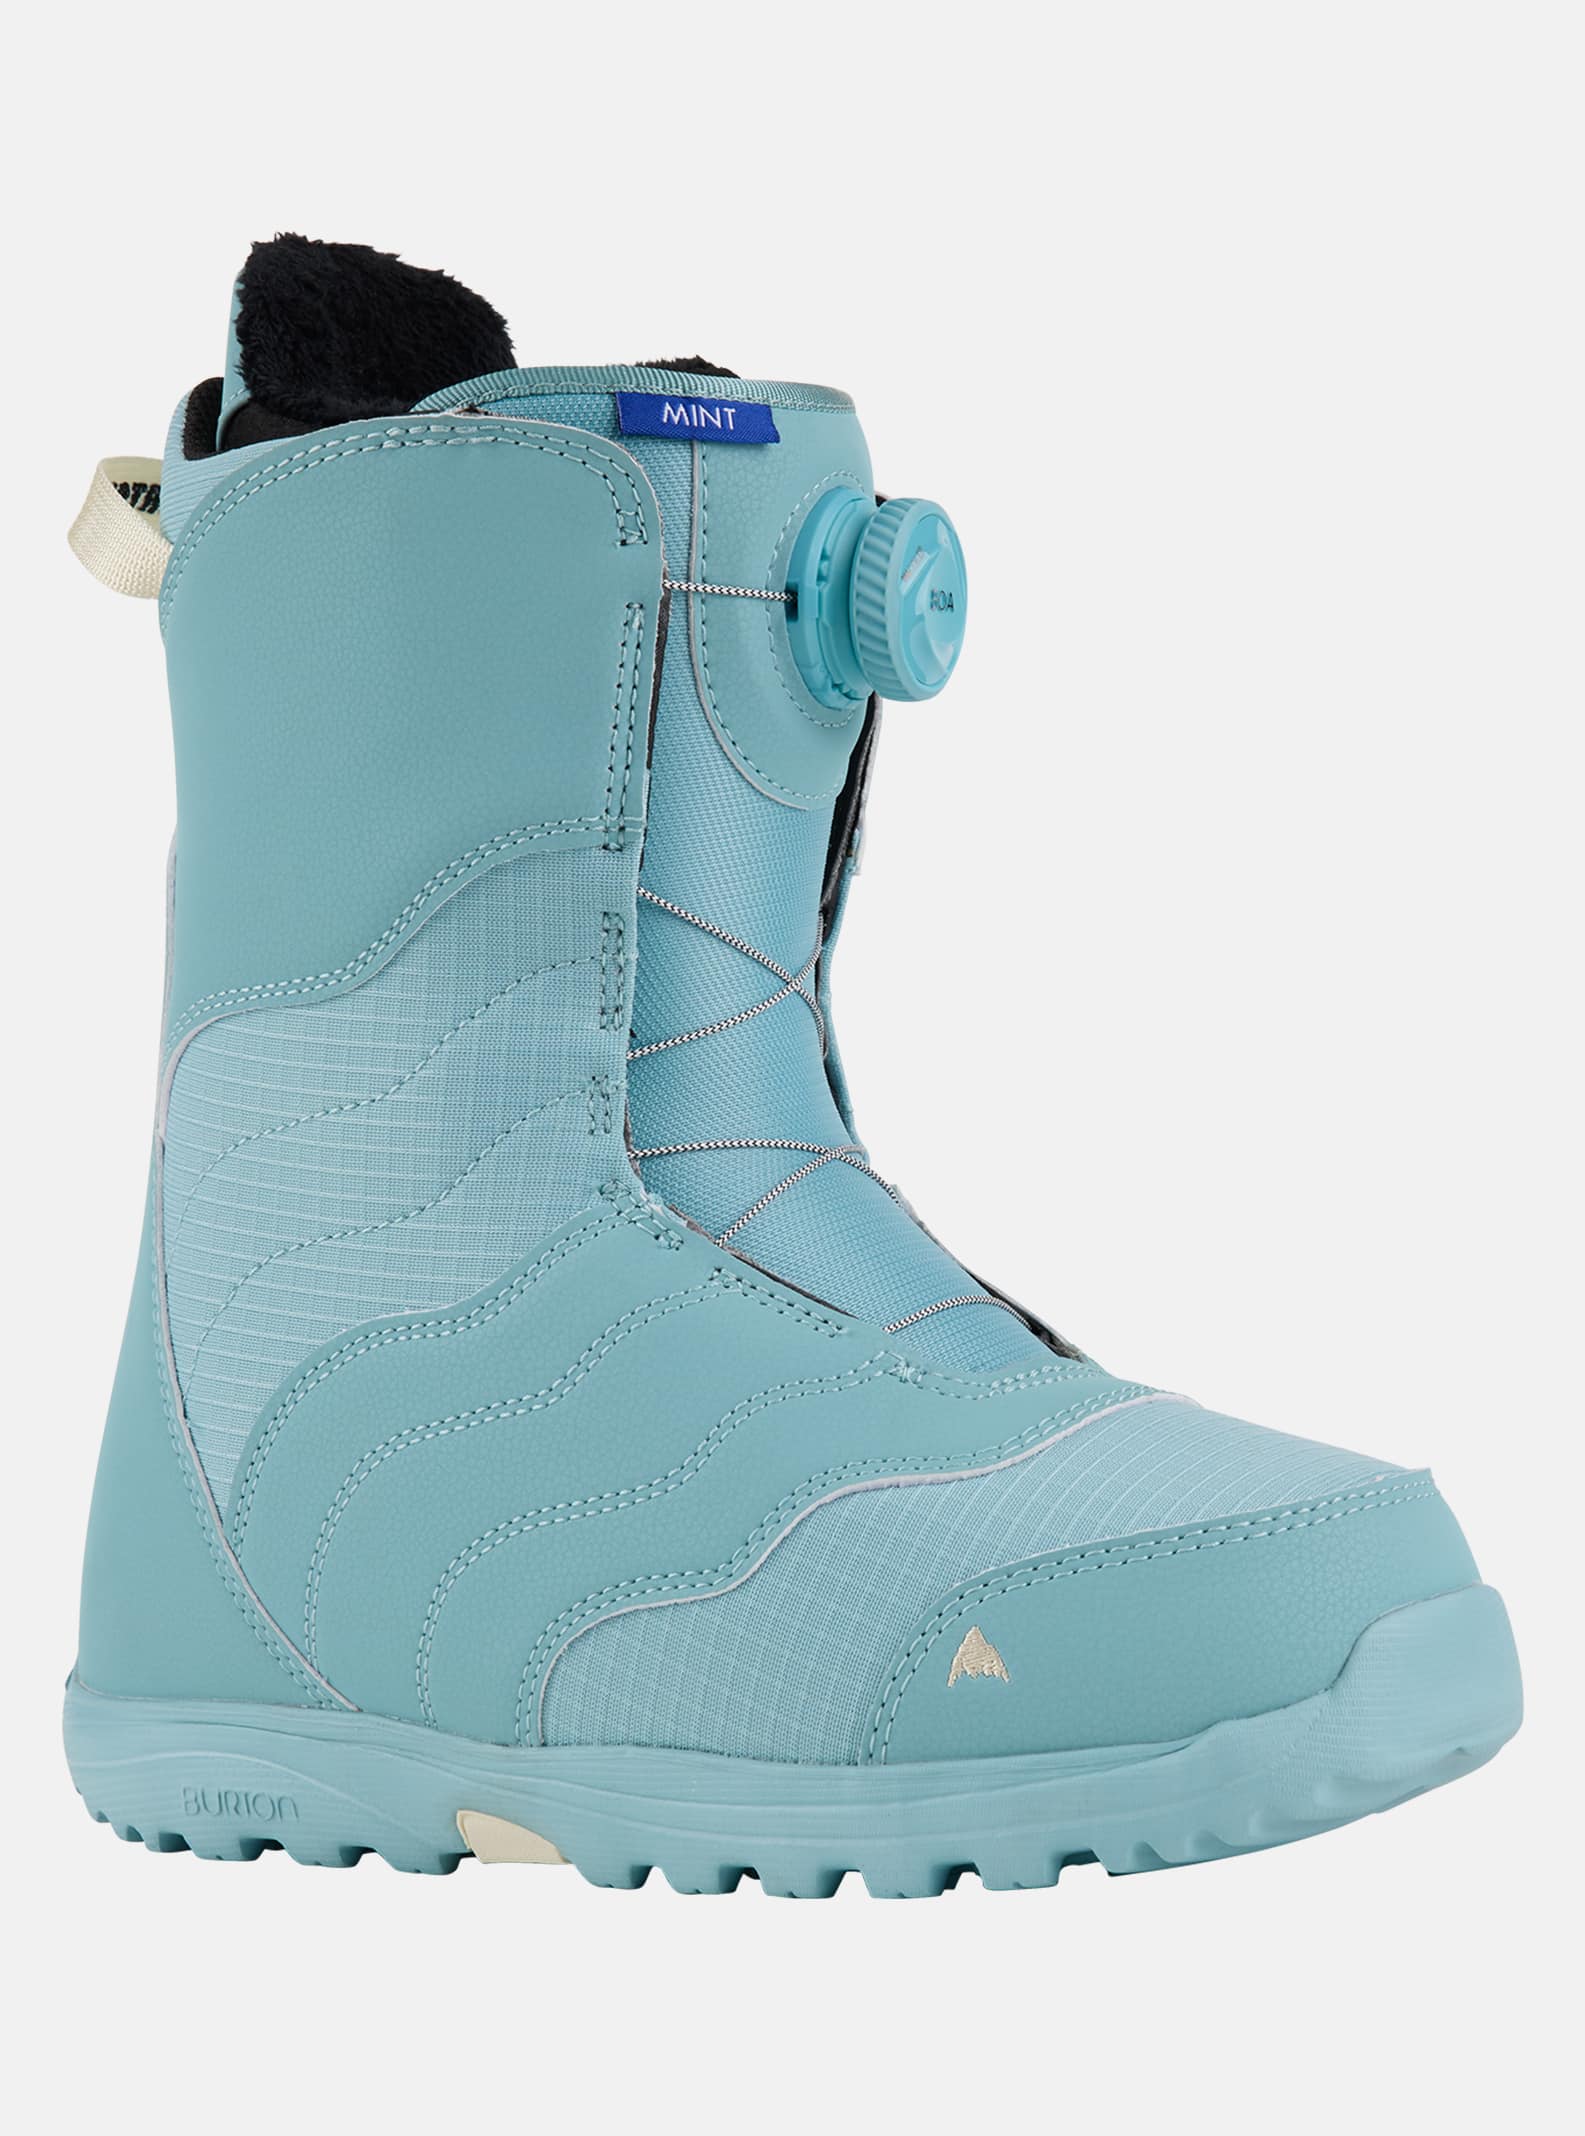 Women's Burton Mint BOA® Wide Snowboard Boots